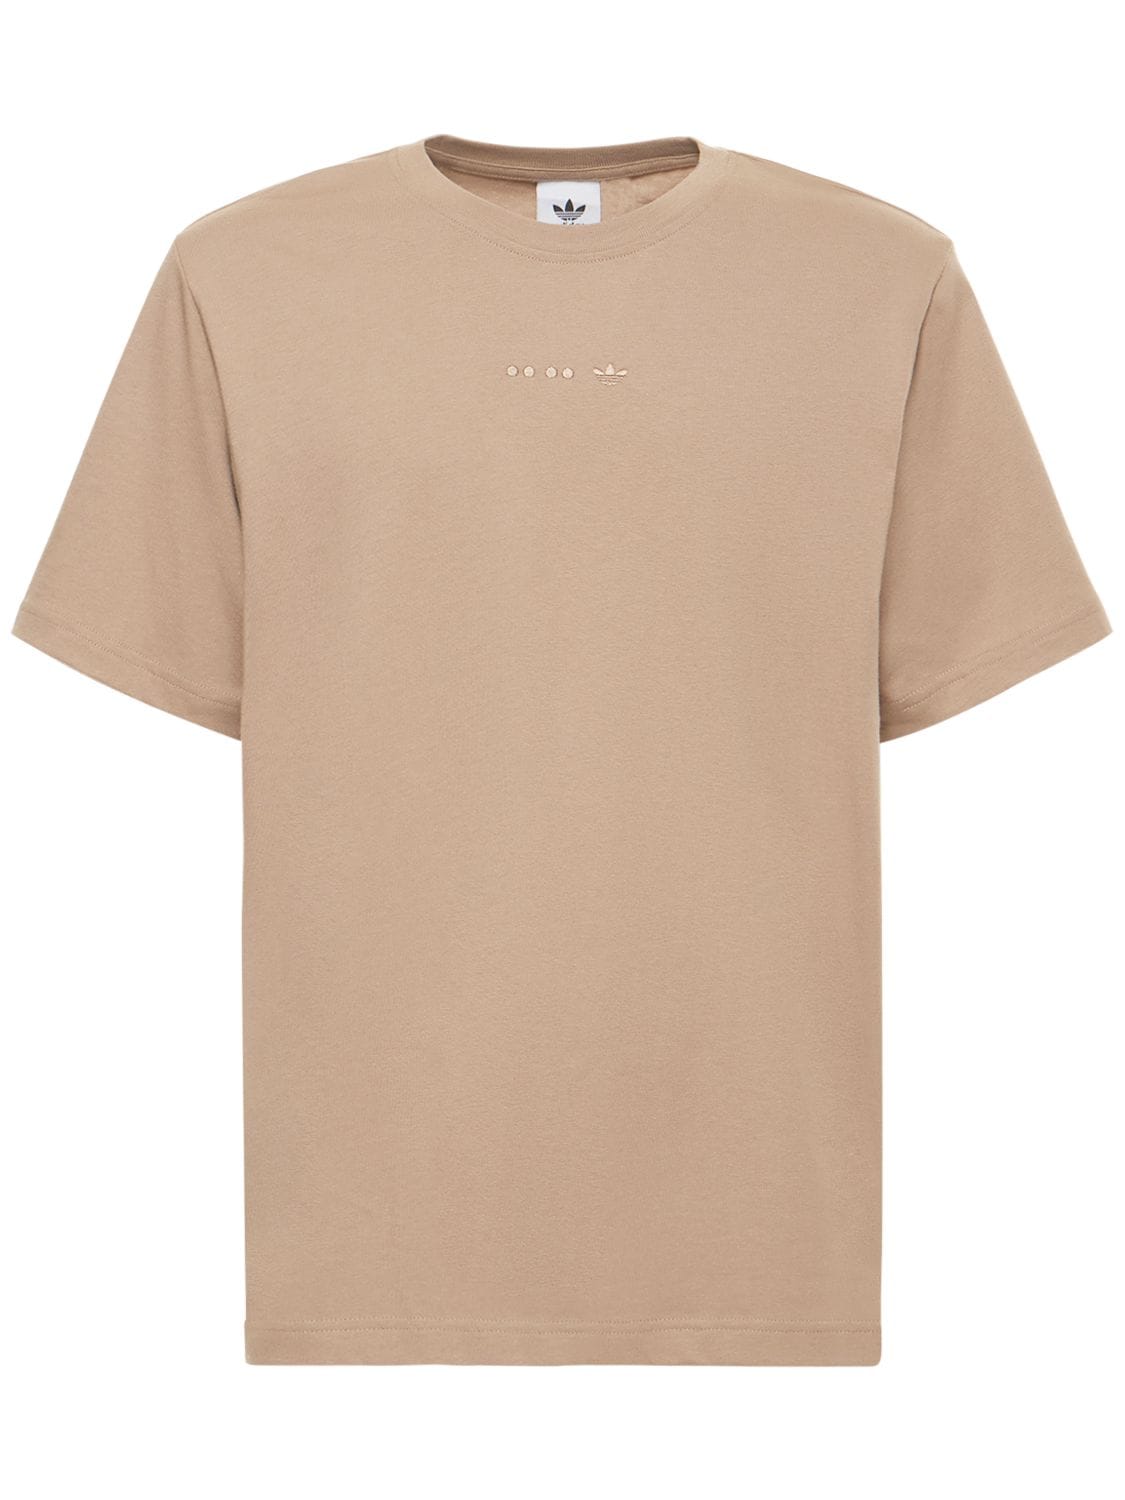 Adidas Originals Essential Cotton Jersey T-shirt In Chalky Brown